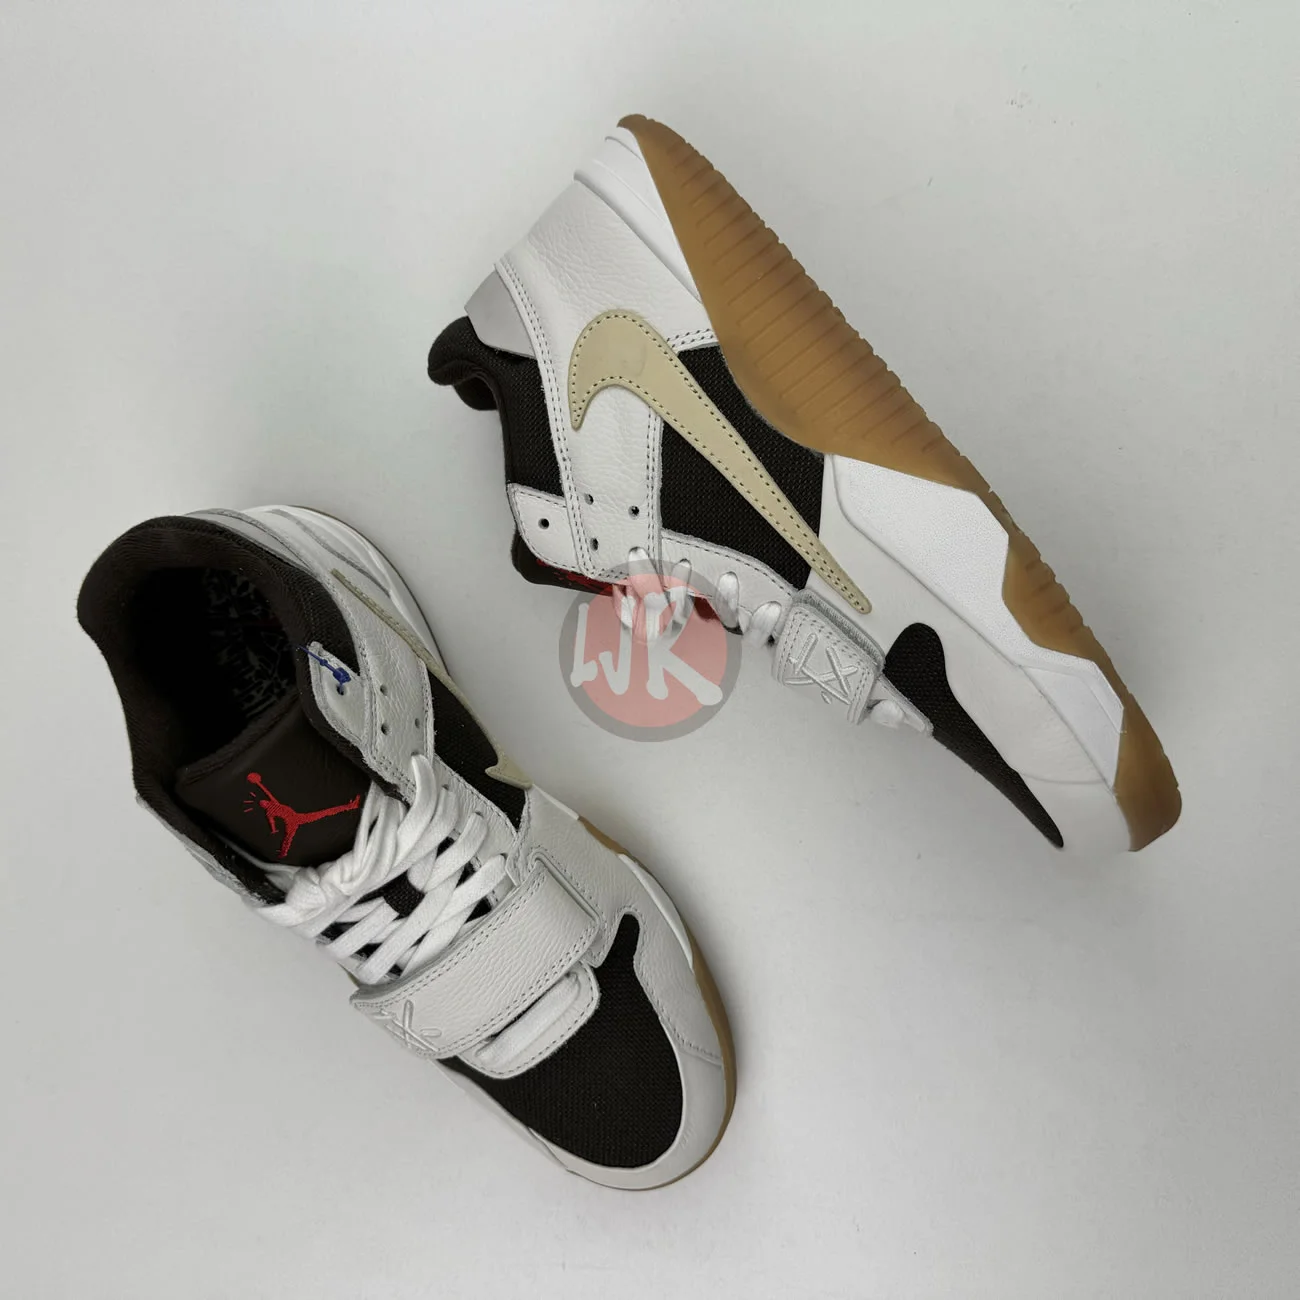 Travis Scott X Jordan Cut The Check Trainer Release Date Ljr Sneakers (6) - bc-ljr.com